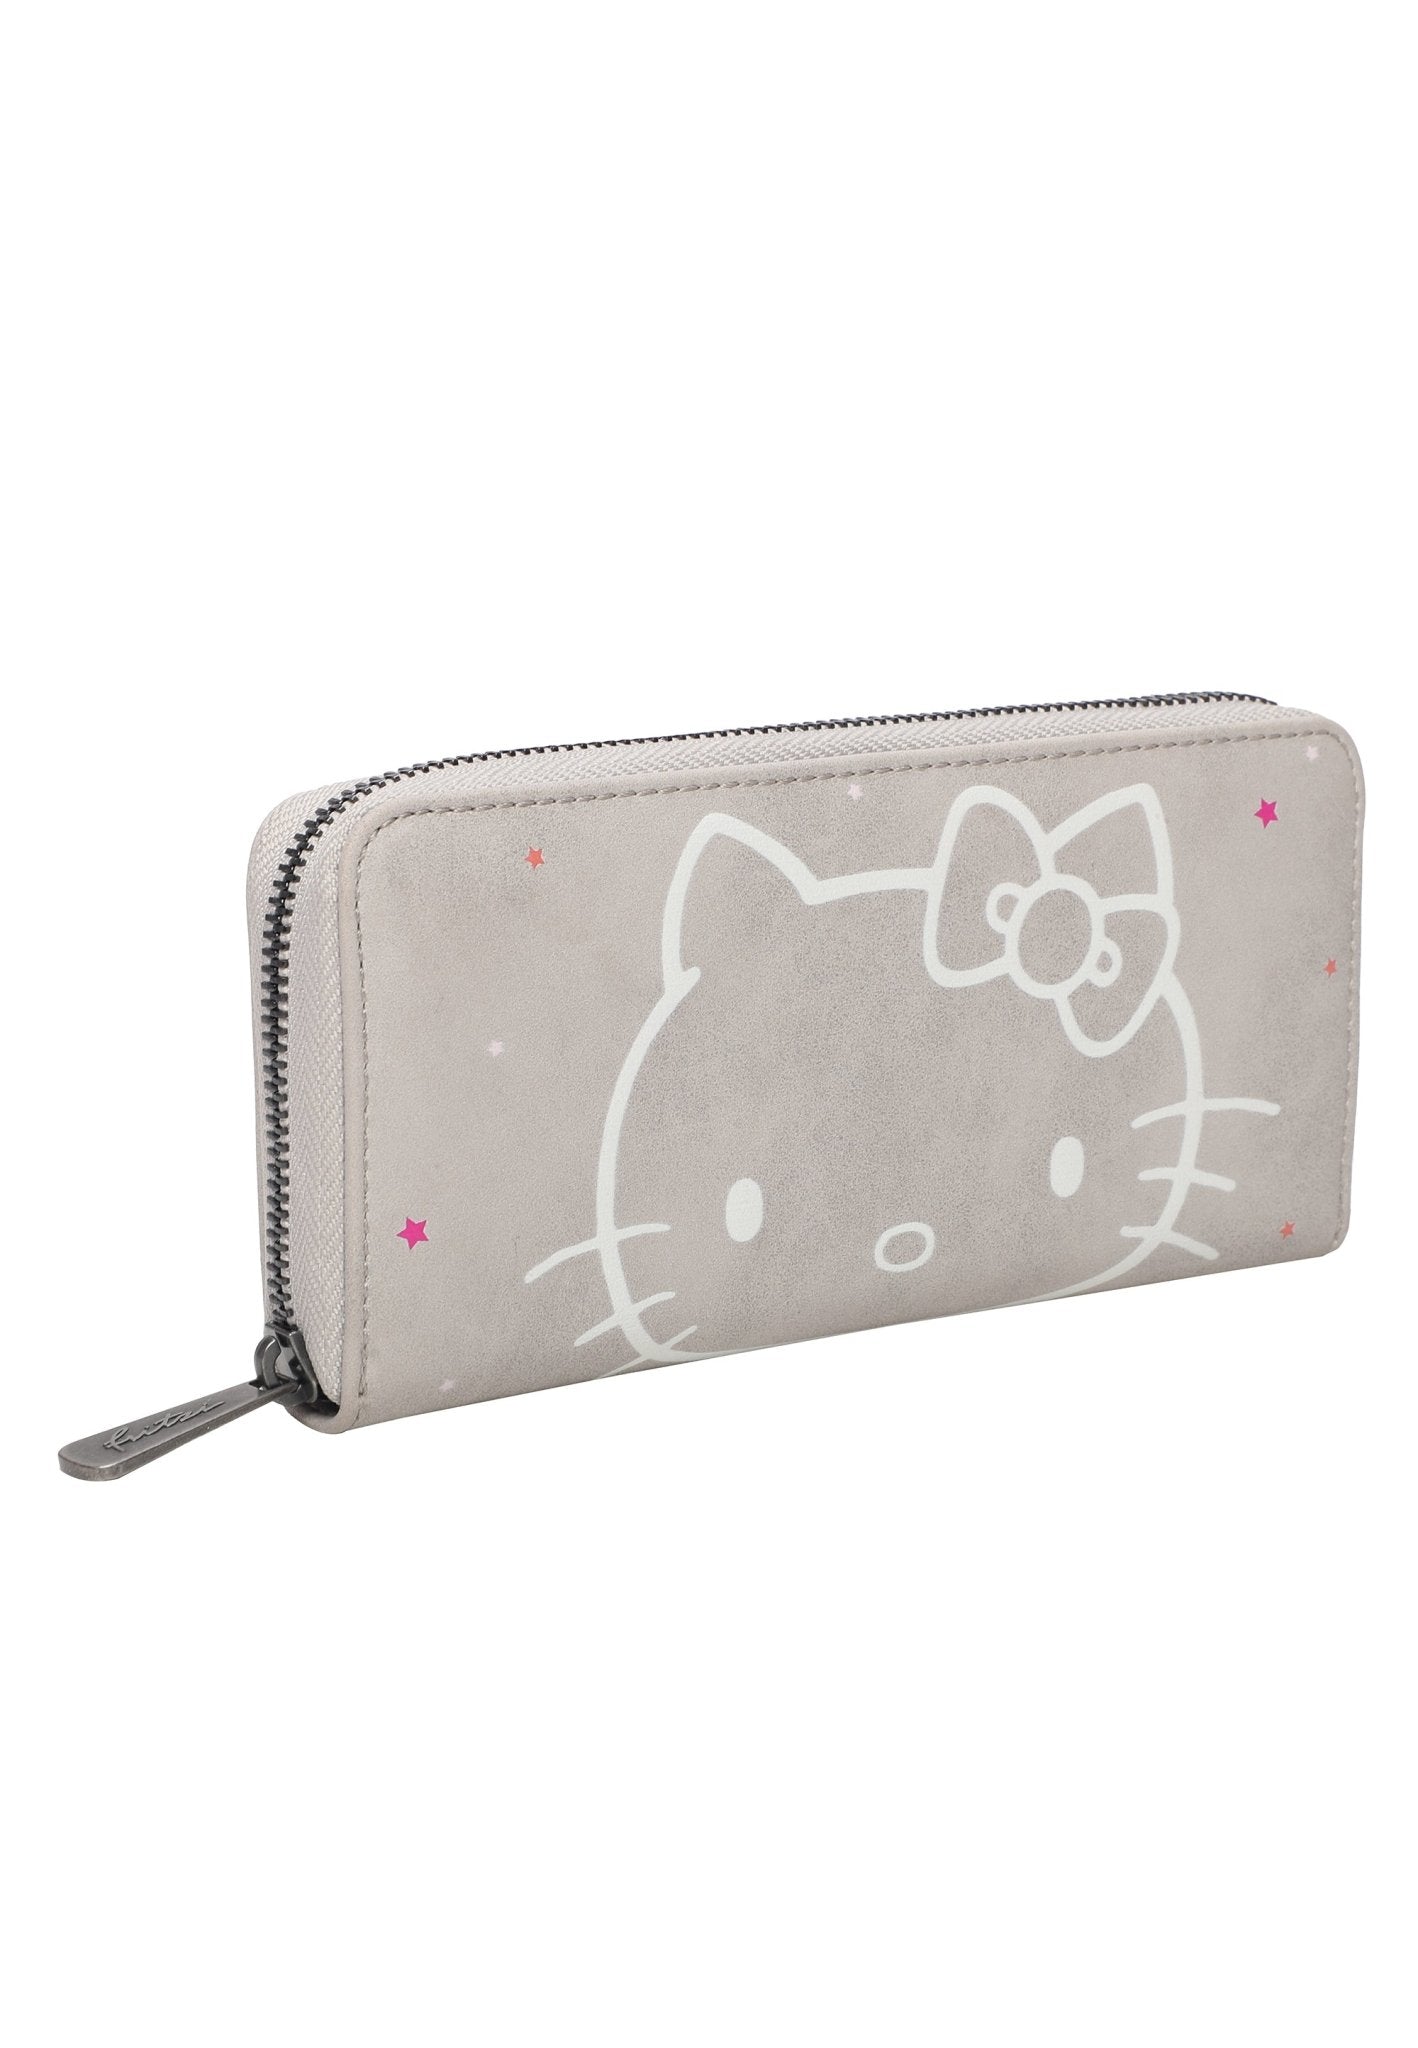 Hello Kitty fritzi limited Wallet - Fritzi aus Preußen - Kitty Stone